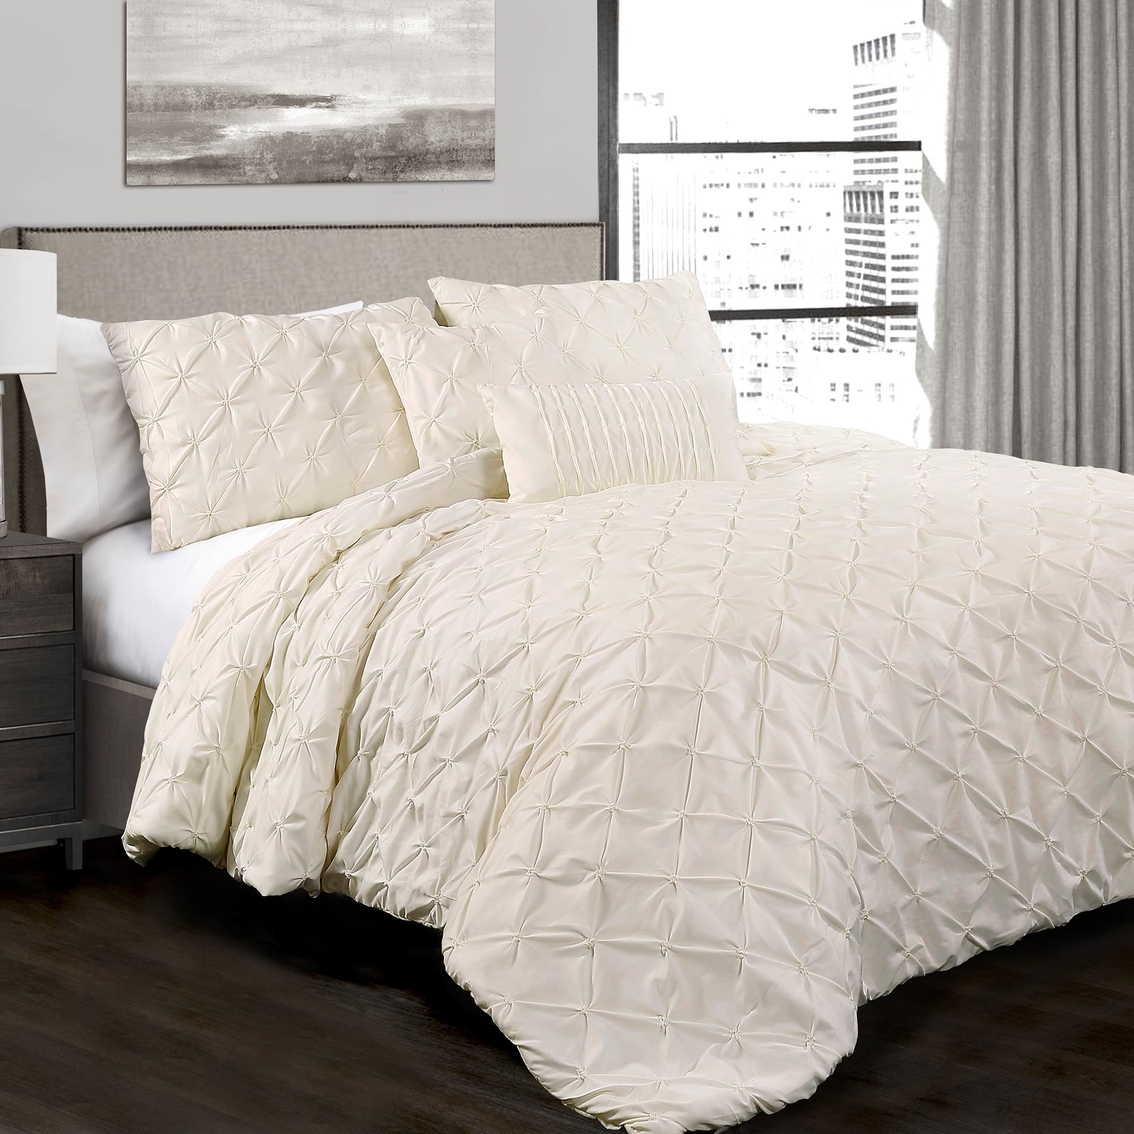 Lush Decor Ravello Pintuck 5 Pc. Comforter Set | Bedding Sets | Back To ...